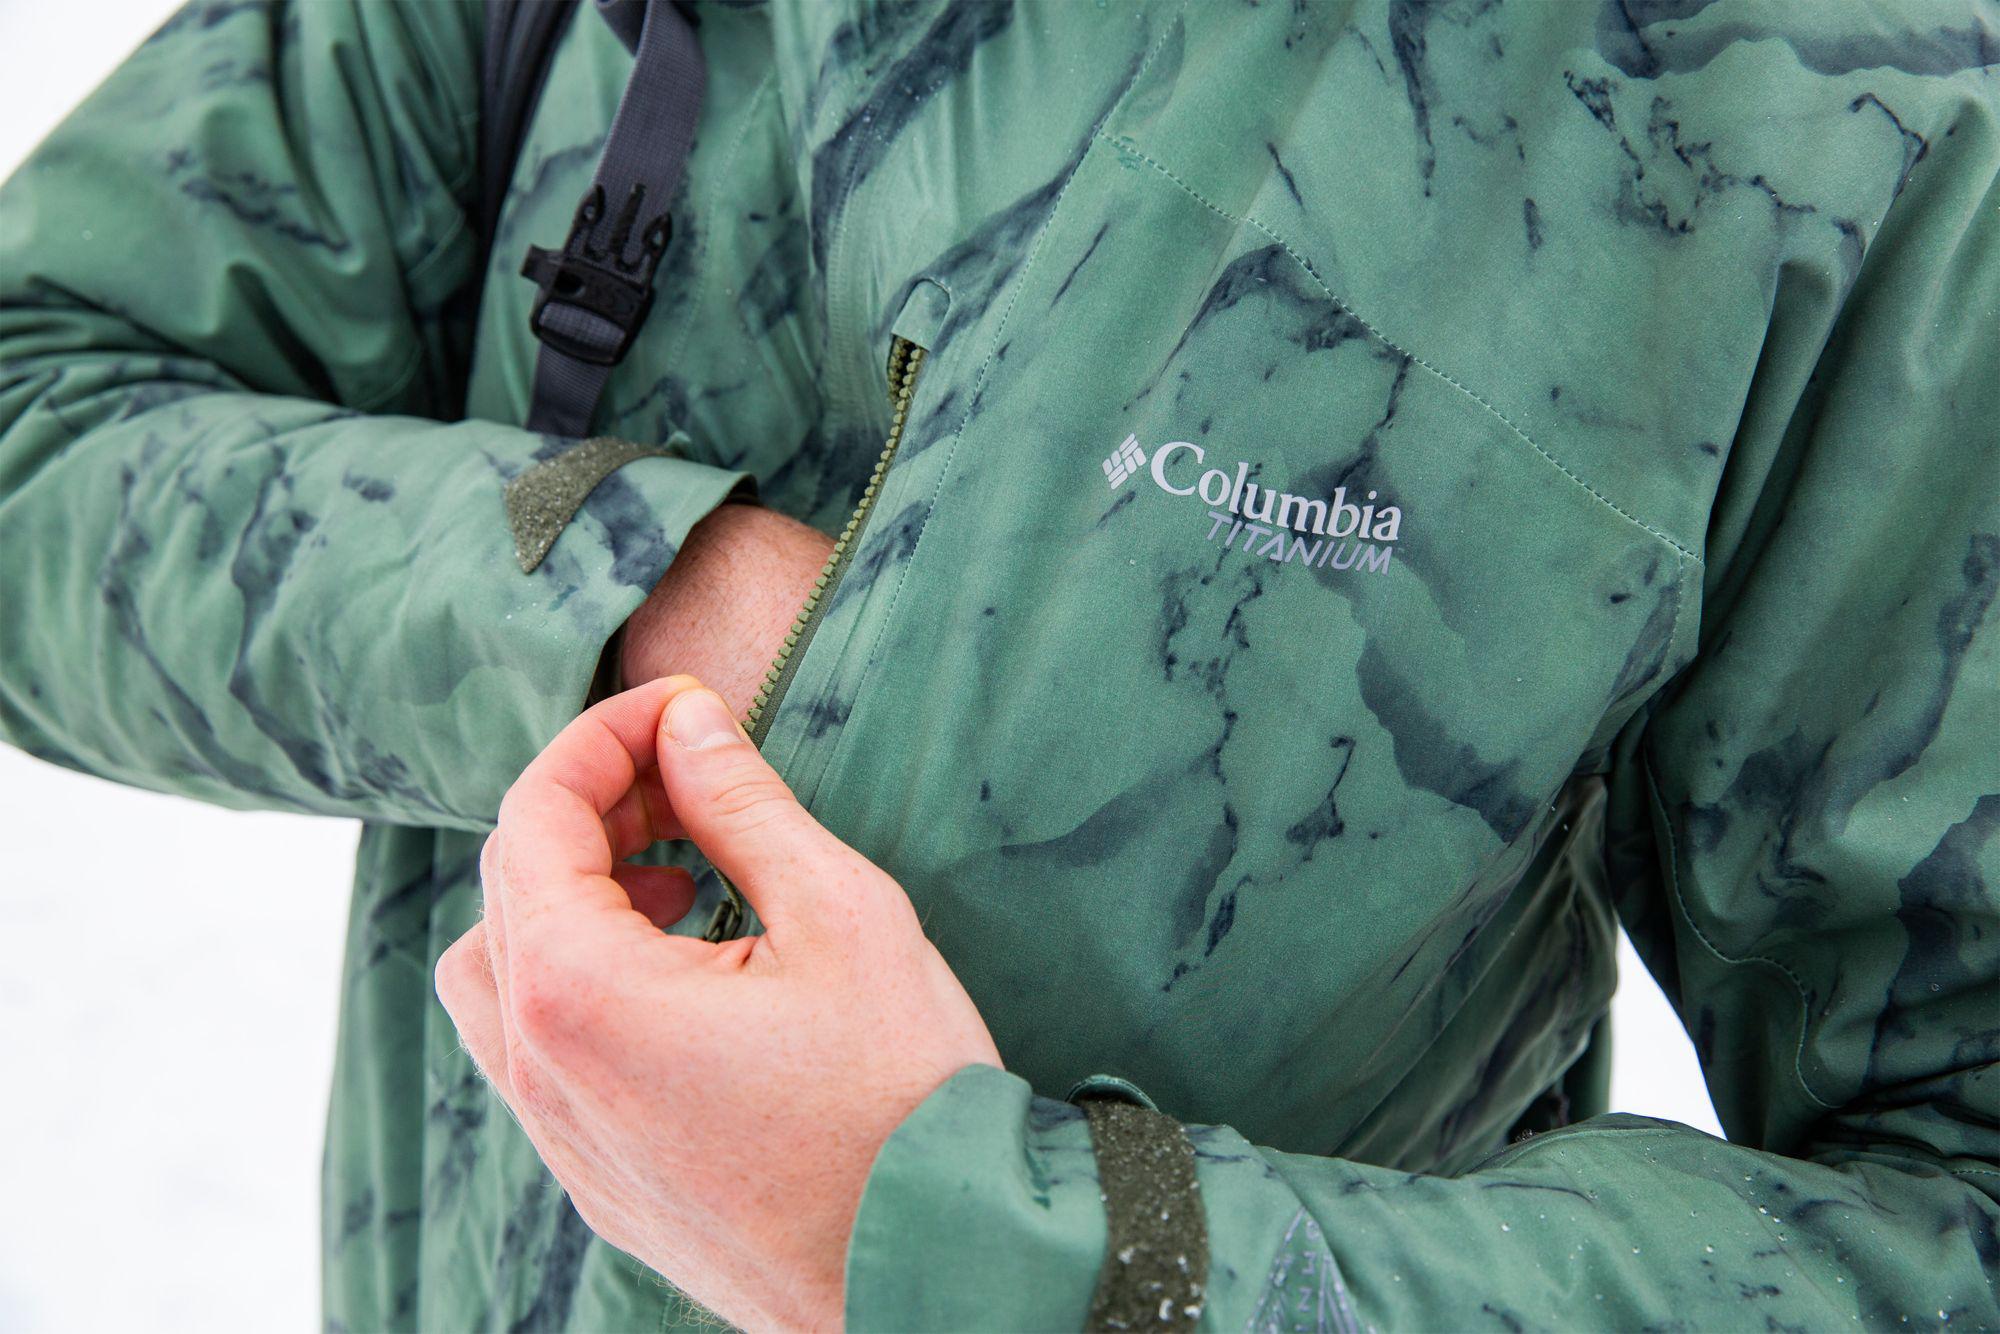 columbia snow rival jacket mens